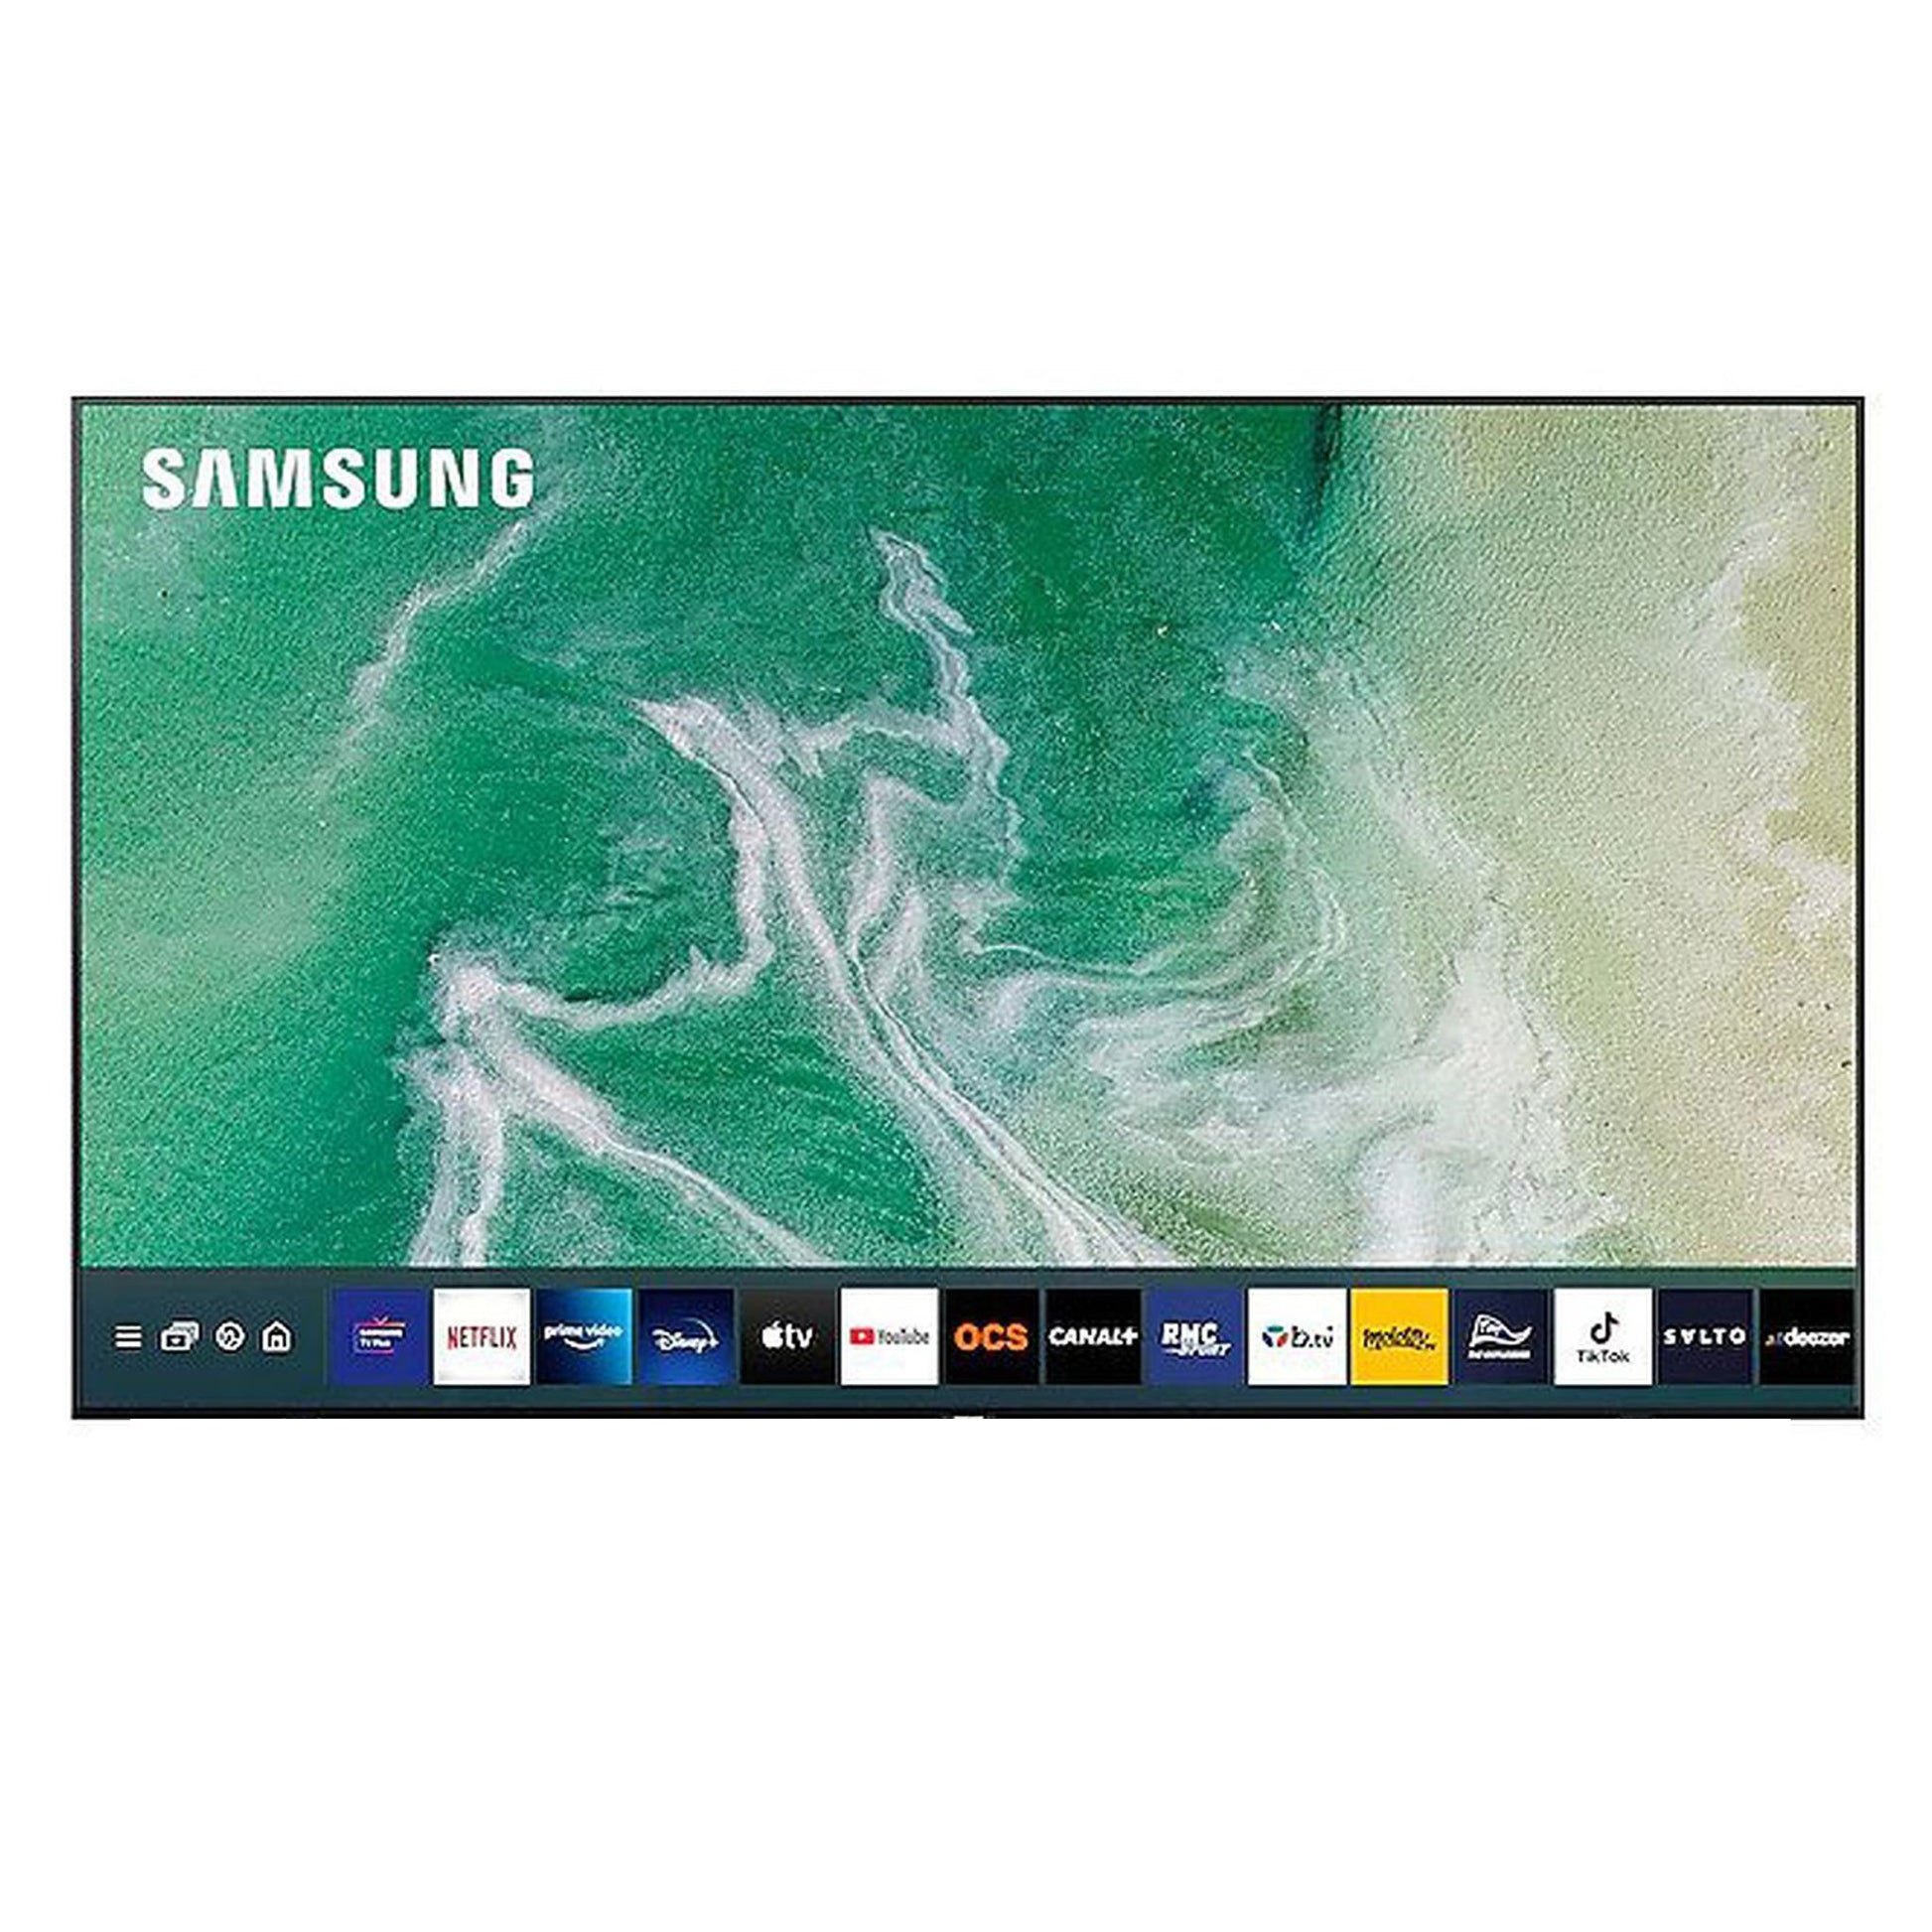 Samsung 58 inch Smart TV, 58TU6925